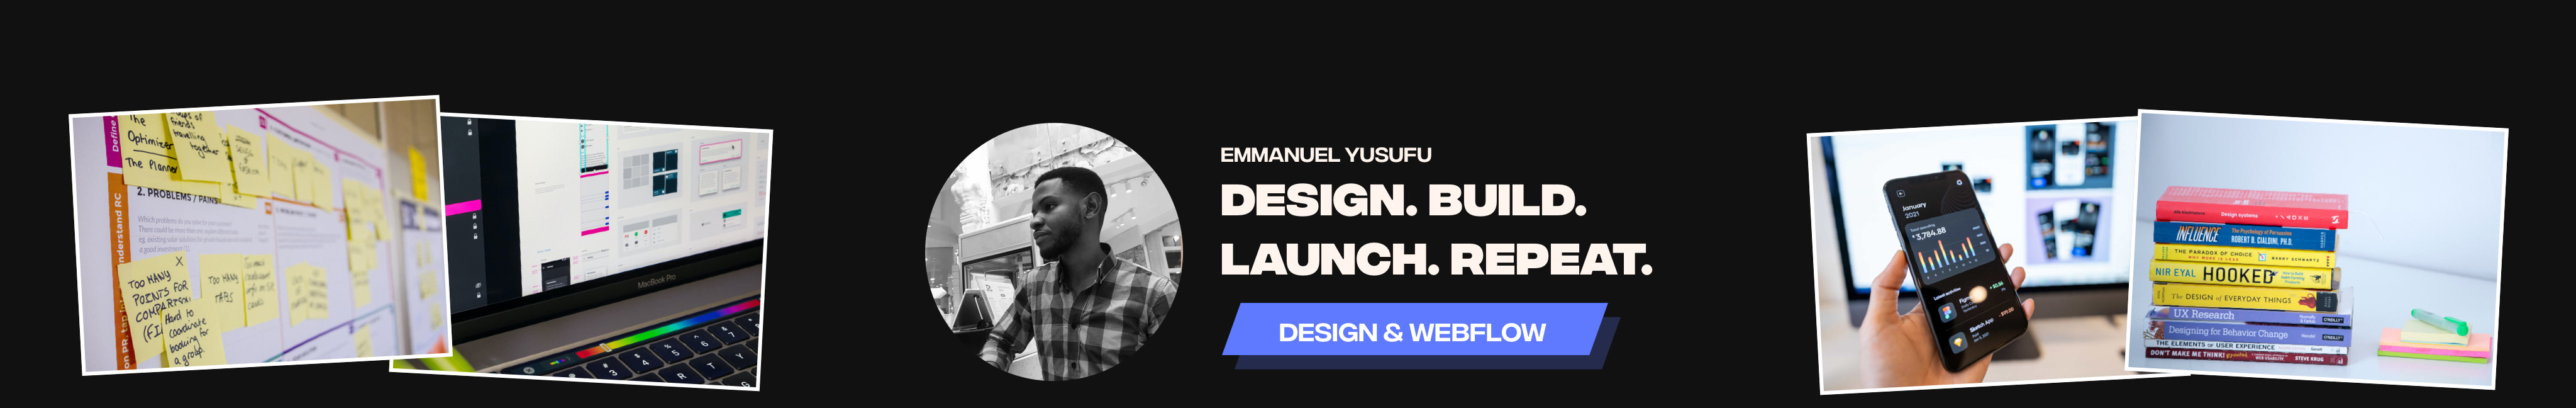 Emmanuel Yusufu's profile banner